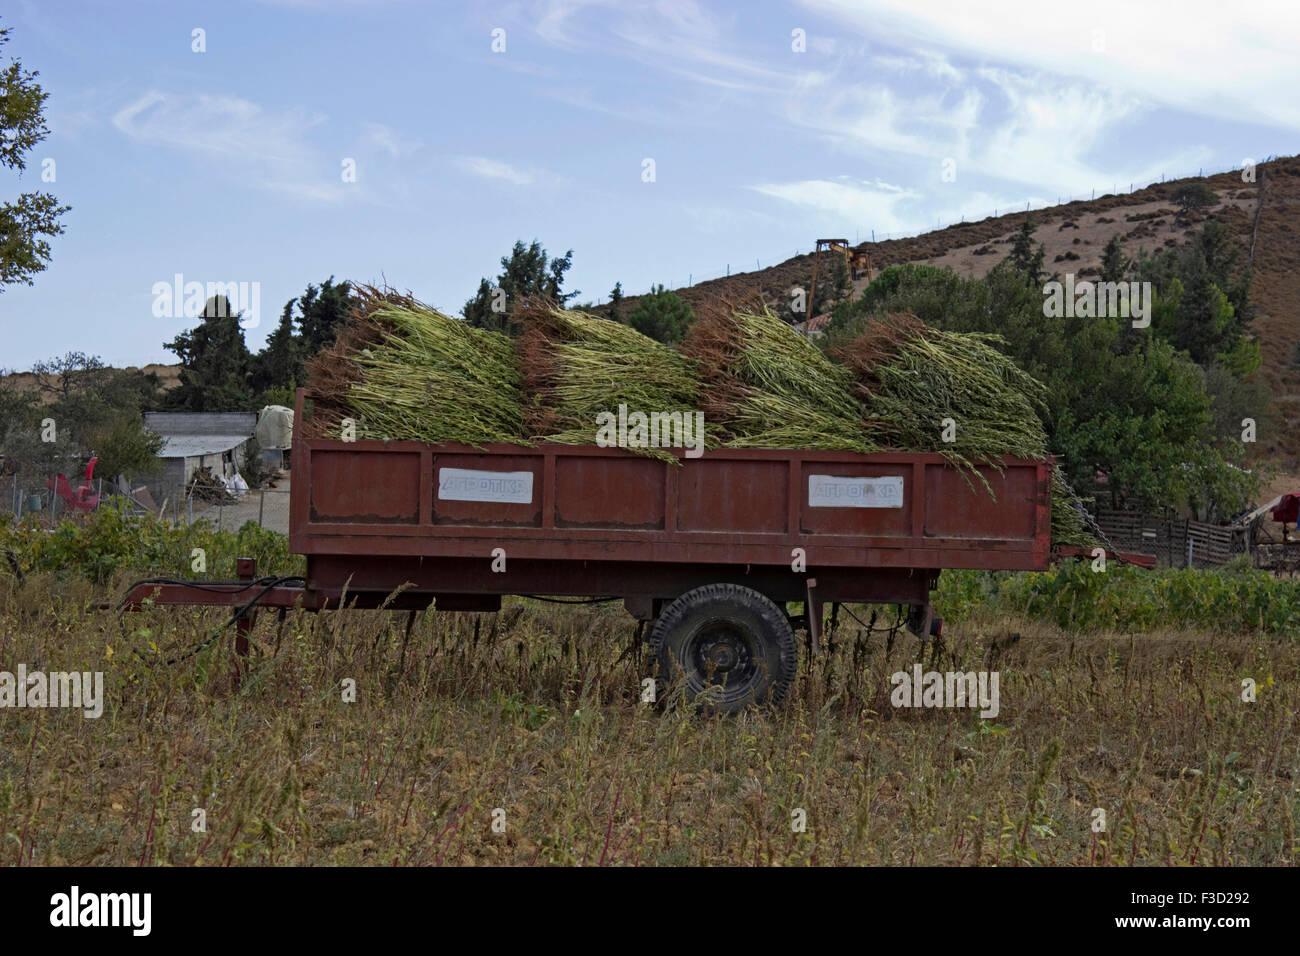 Sesame seedpods plants loaded on a coach-work against blue sky. Limnos or lemnos island, Greece Stock Photo